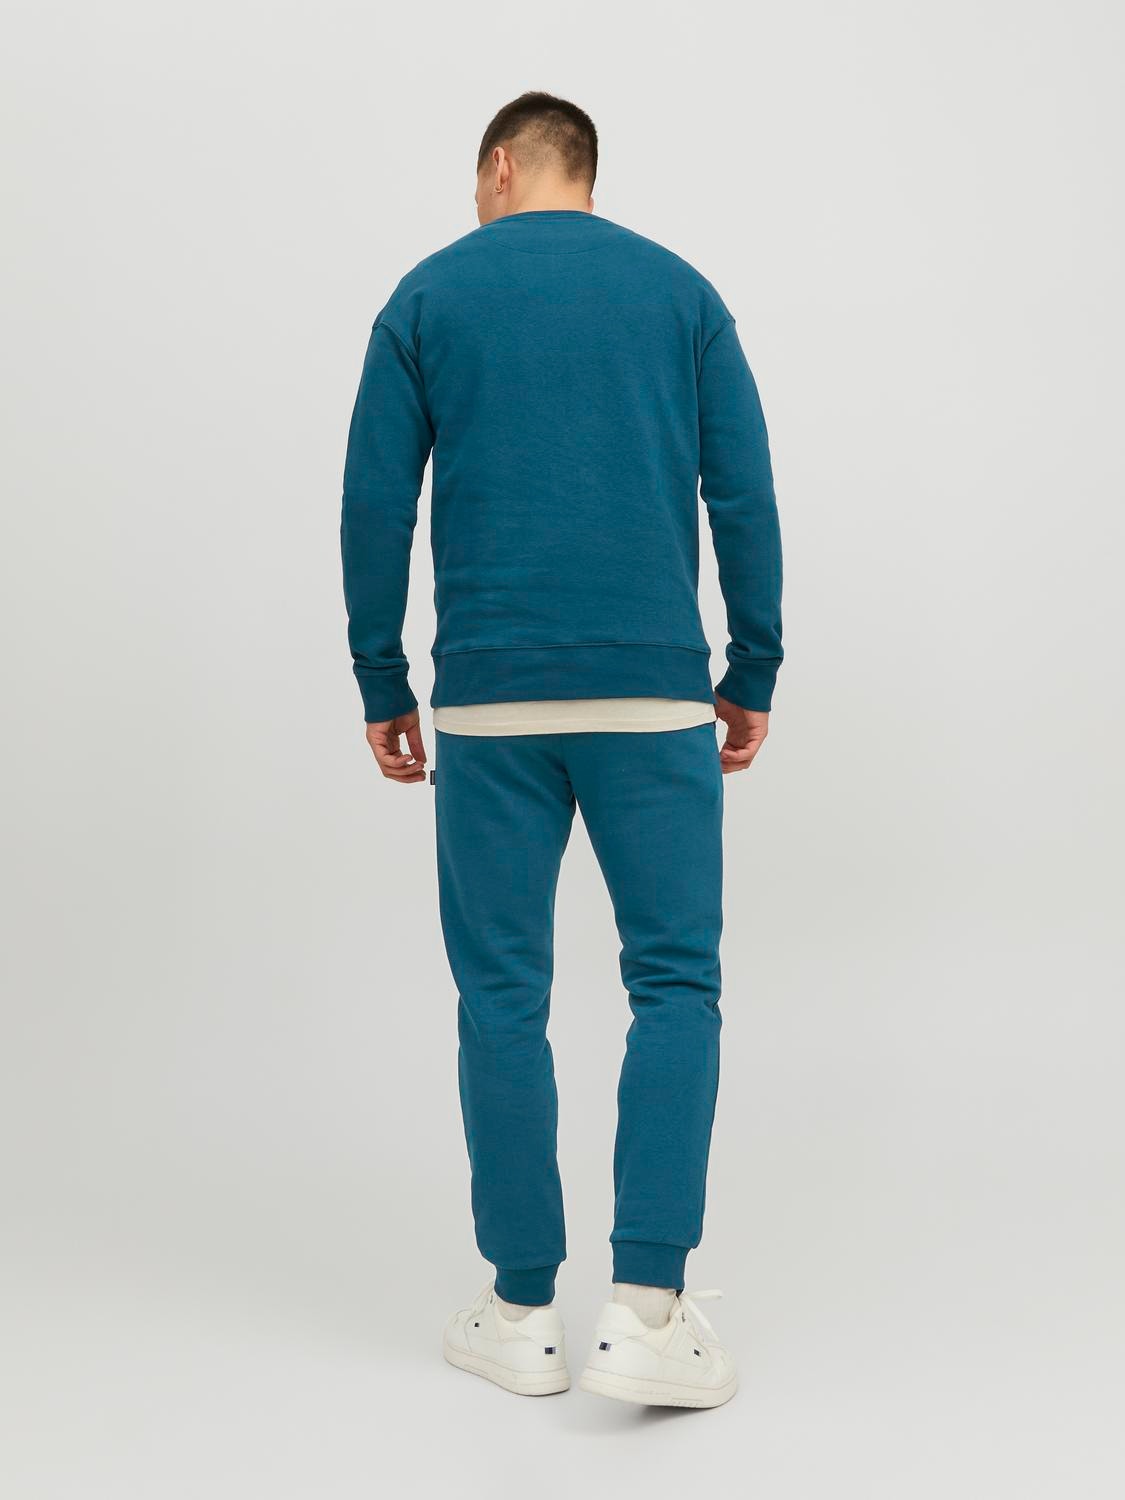 Jack & Jones Plain Crewn Neck Sweatshirt -Sailor blue - 12208182